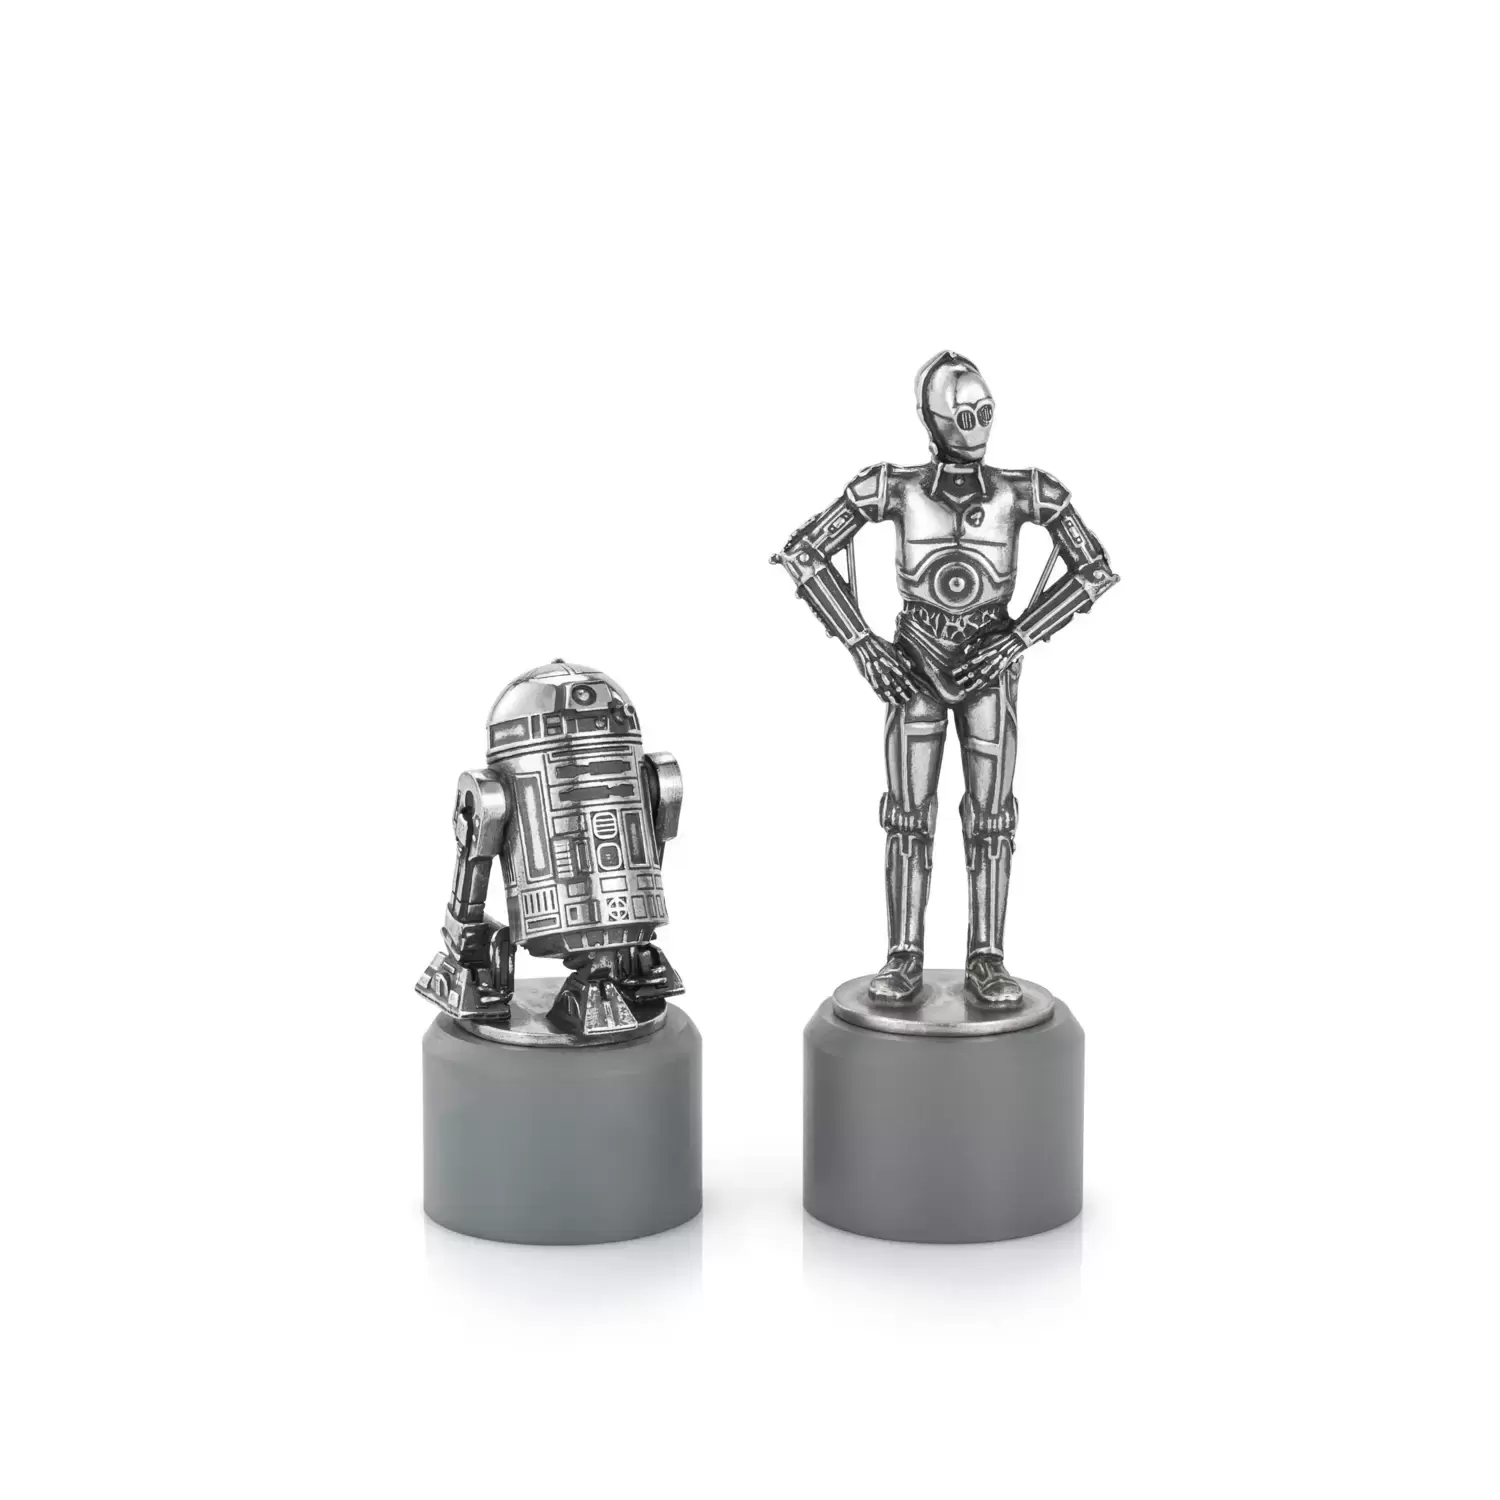 Royal Selangor - Star Wars - Chess Piece - R2-D2 & C-3PO